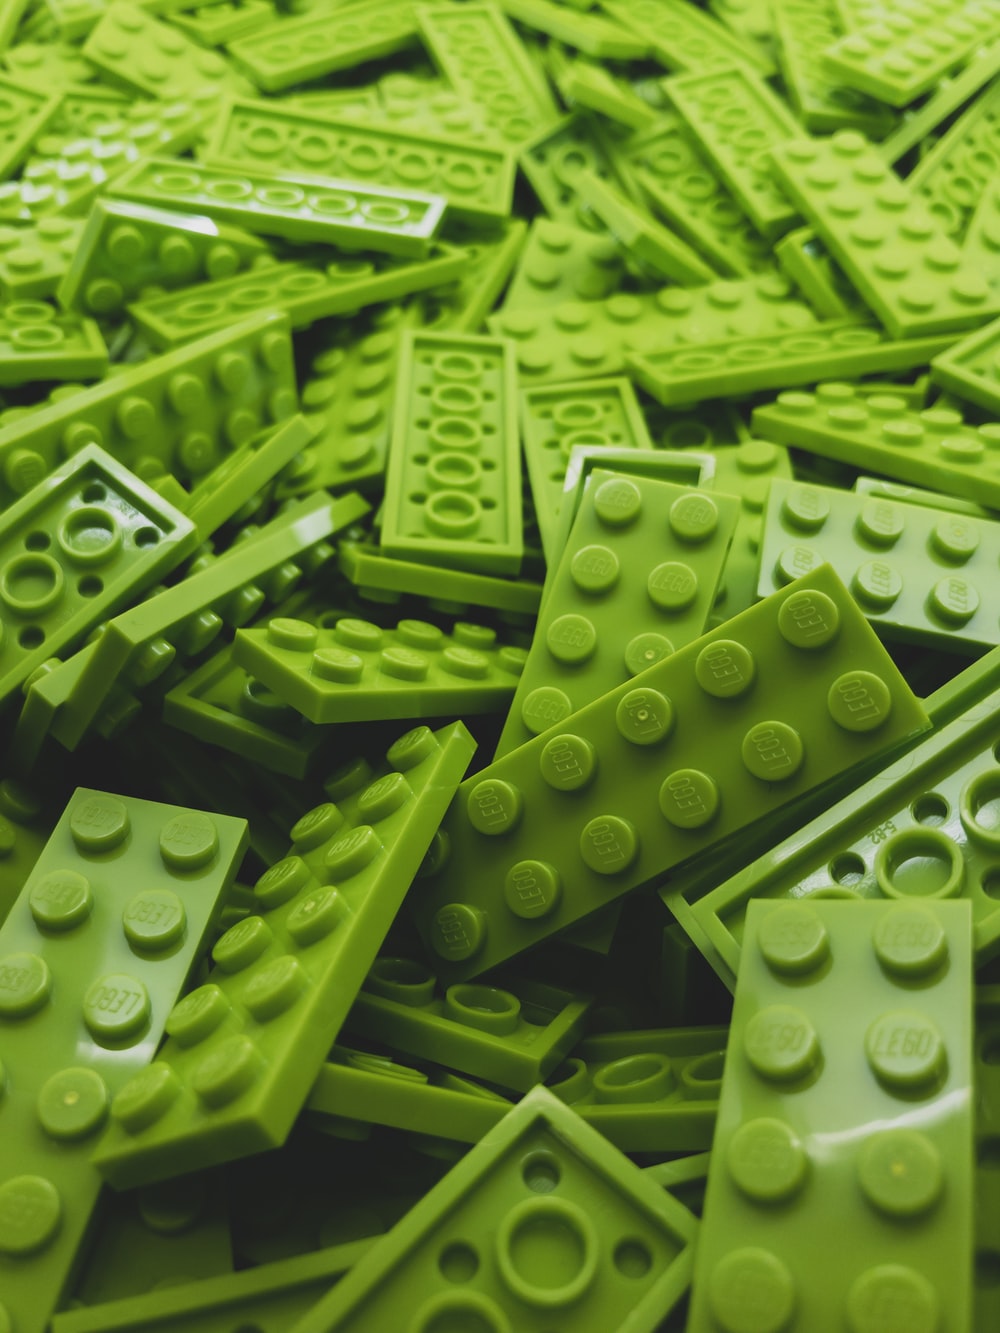 Lego Bricks Picture. Download Free Image